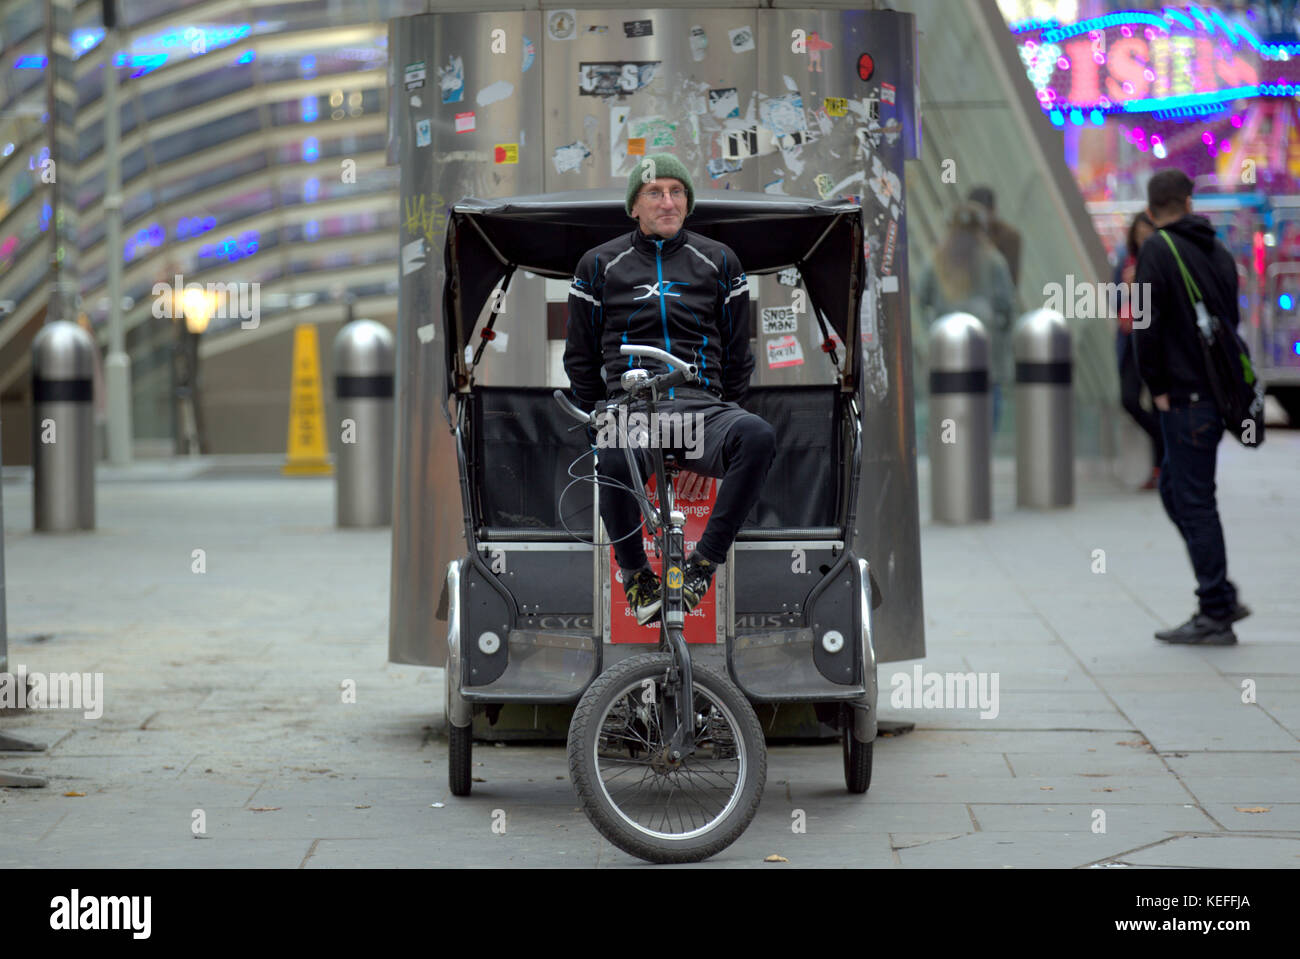 Bike Taxi, cycle rickshaw pedicab  glasgow buchanan street local artist Tom Brown on his day job Stock Photo